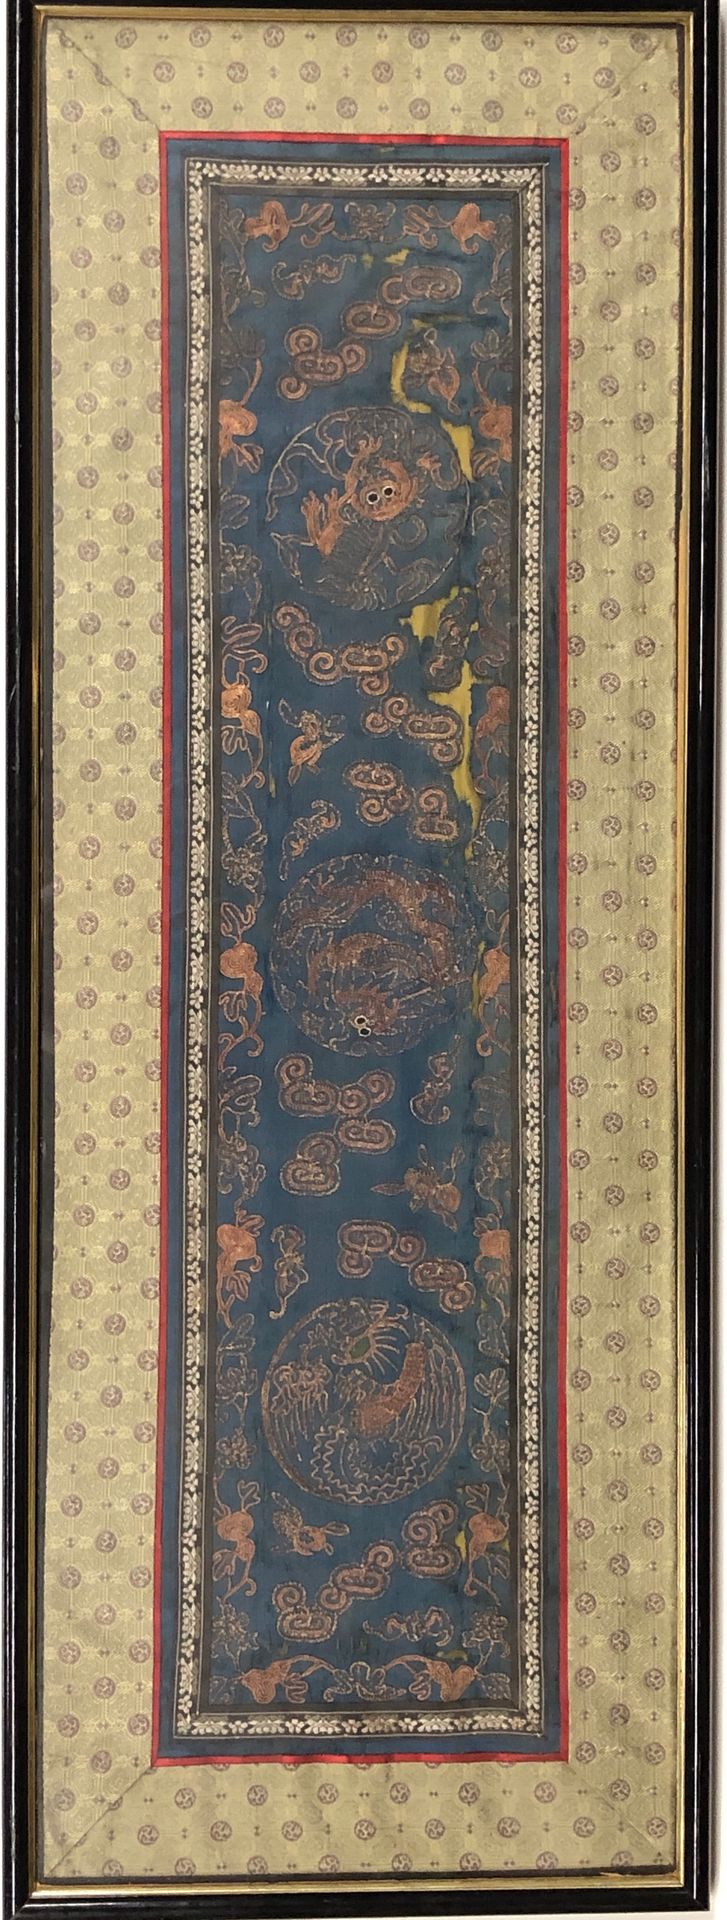 Null Bordado sobre seda con animales sobre fondo azul


Tamaño: 52,5 x 13 cm